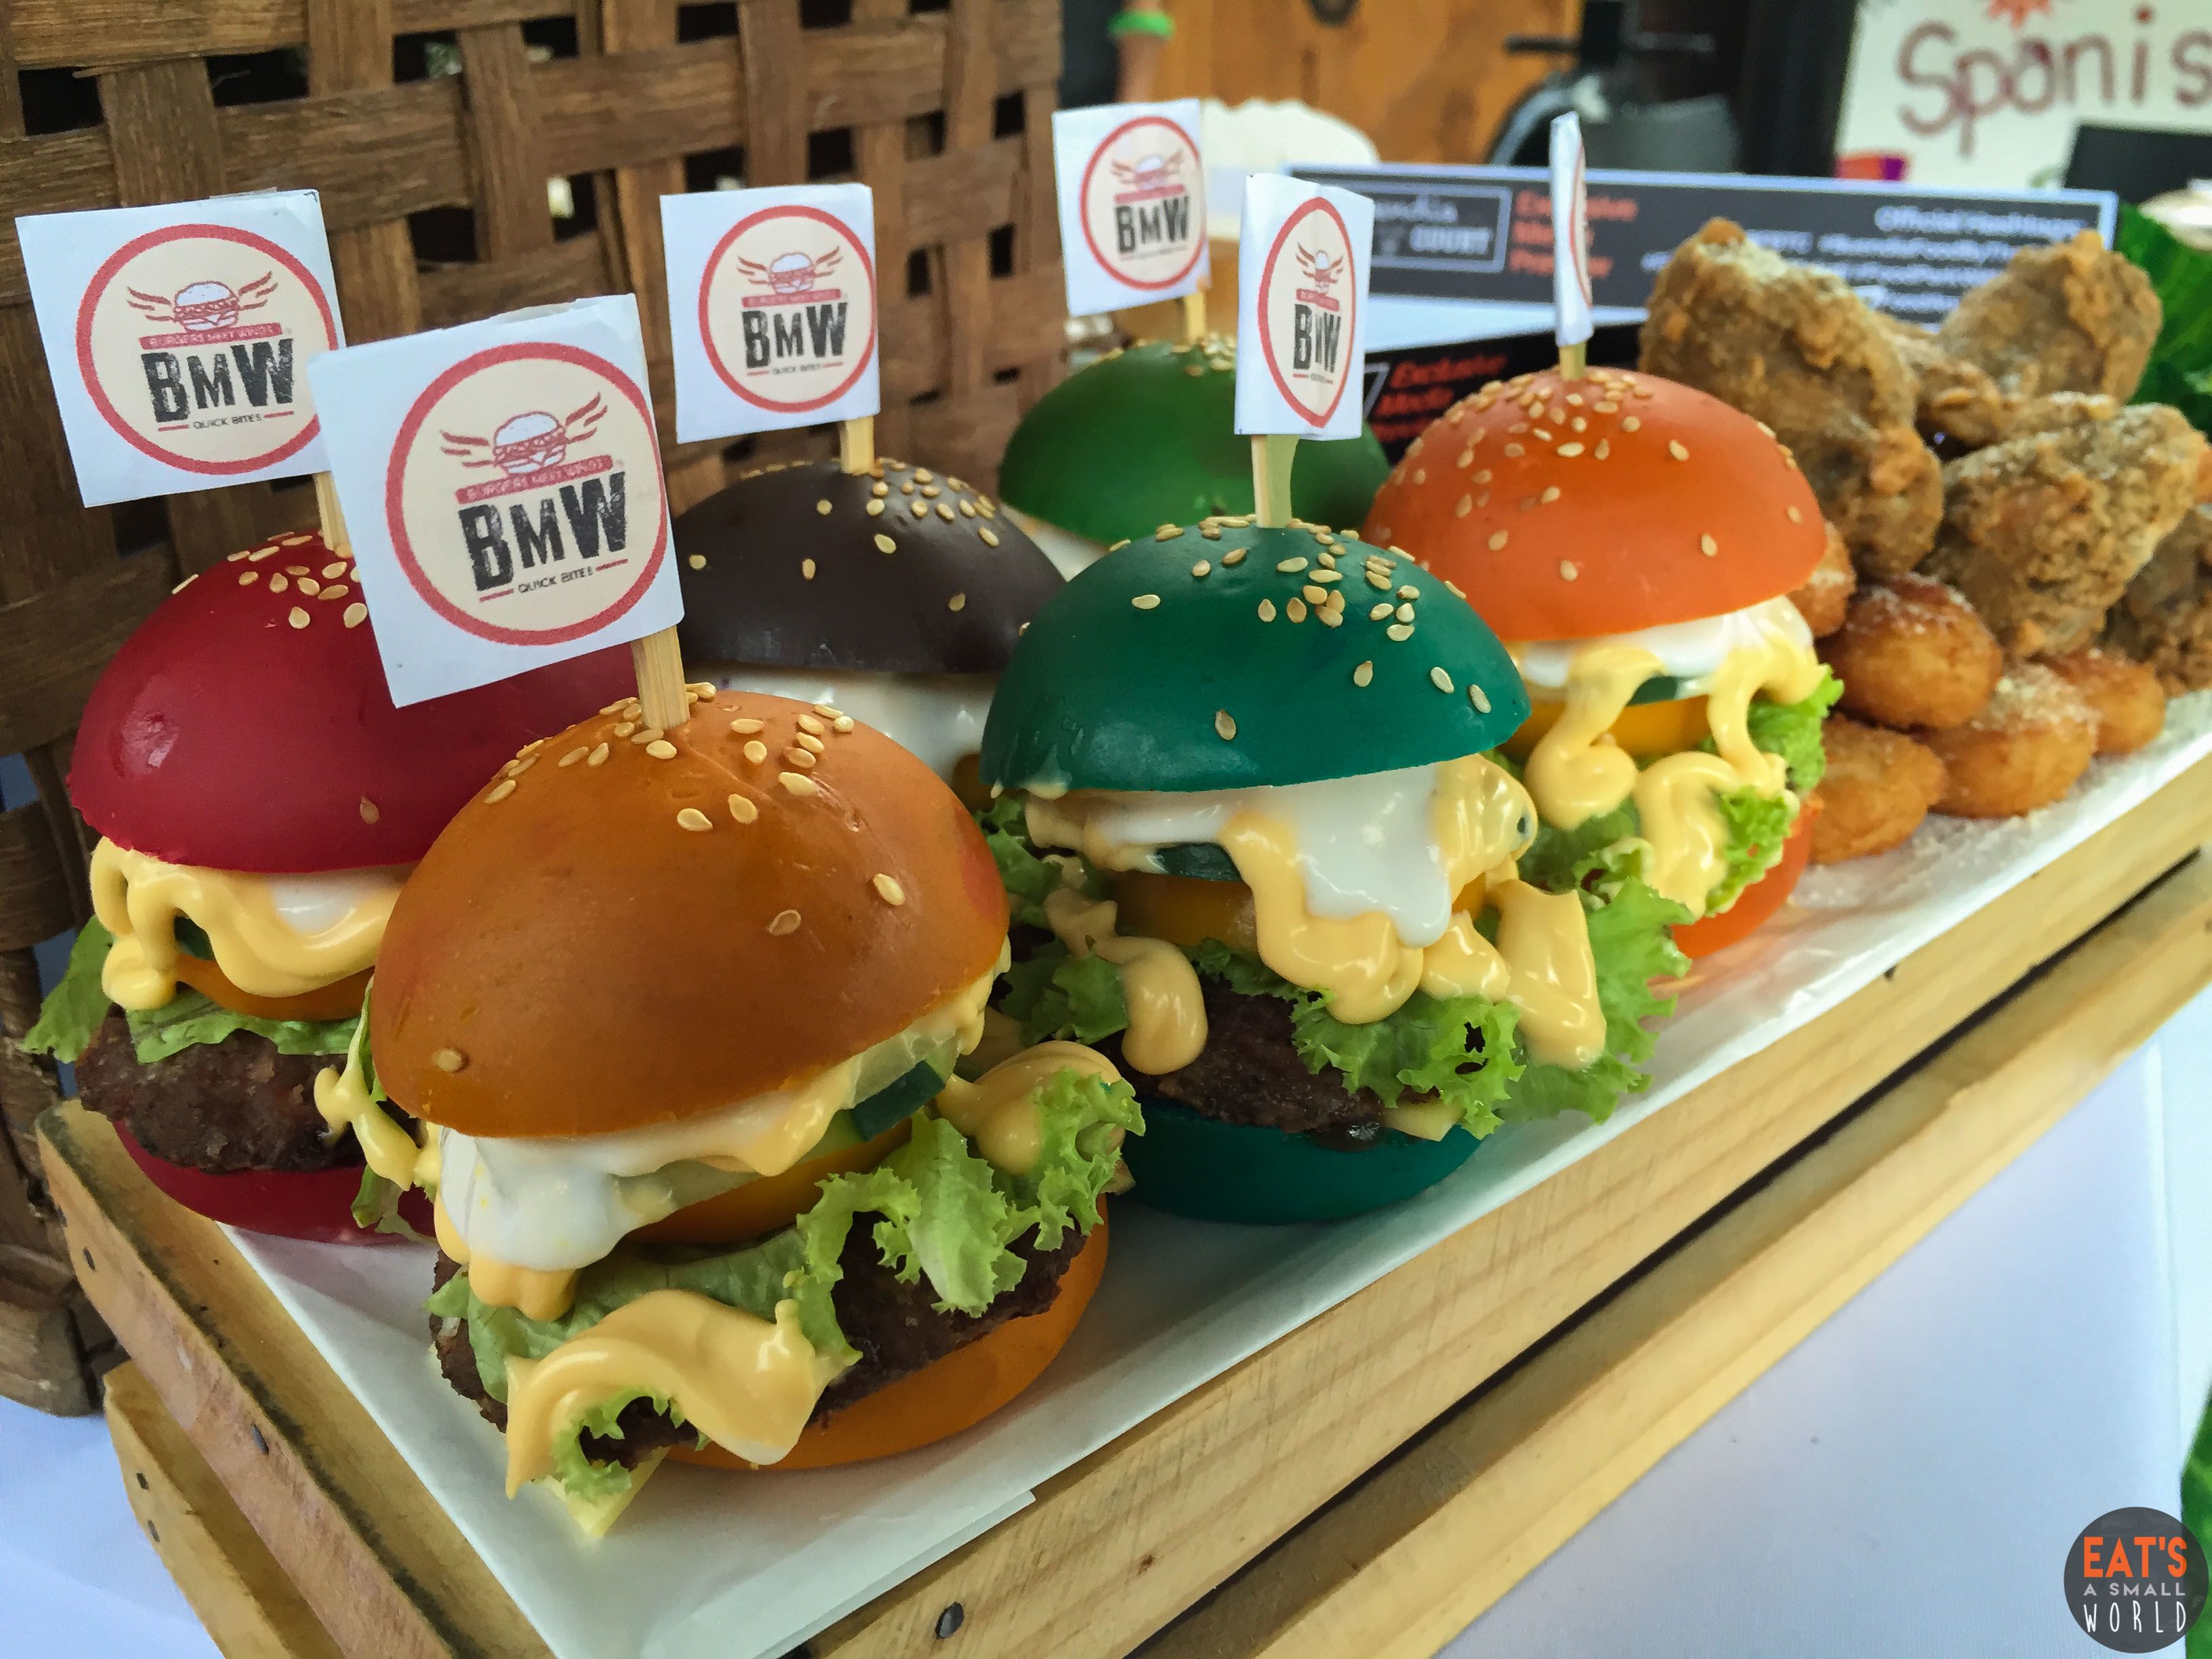  Gambar  Makanan Kartun  Burger Moa Gambar 